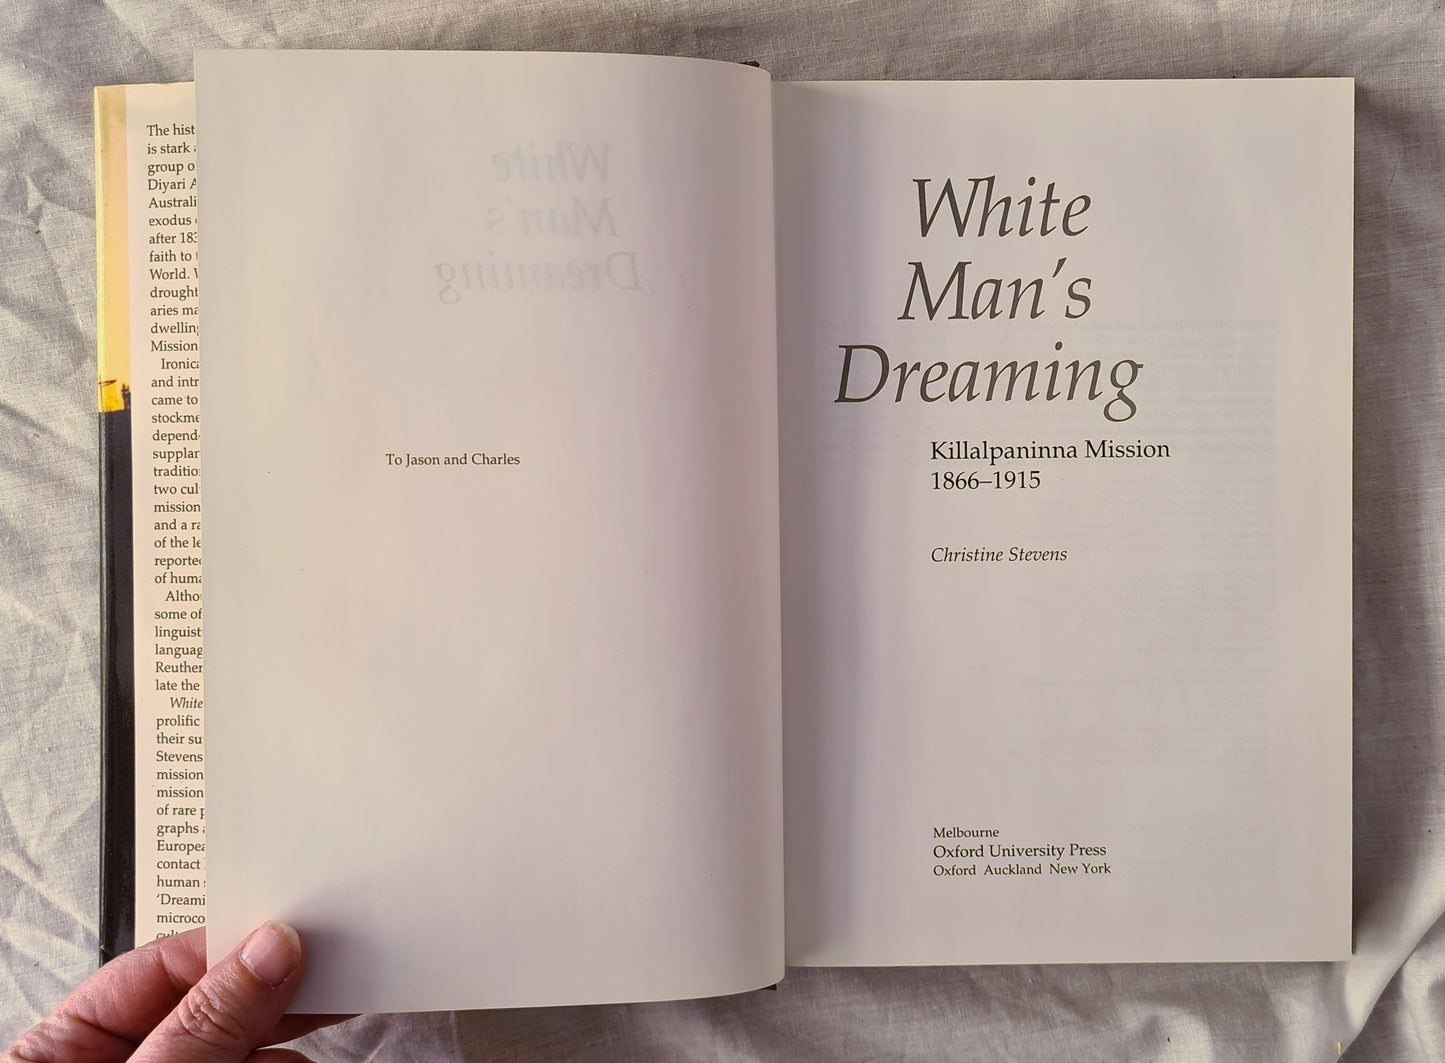 White Man’s Dreaming by Christine Stevens